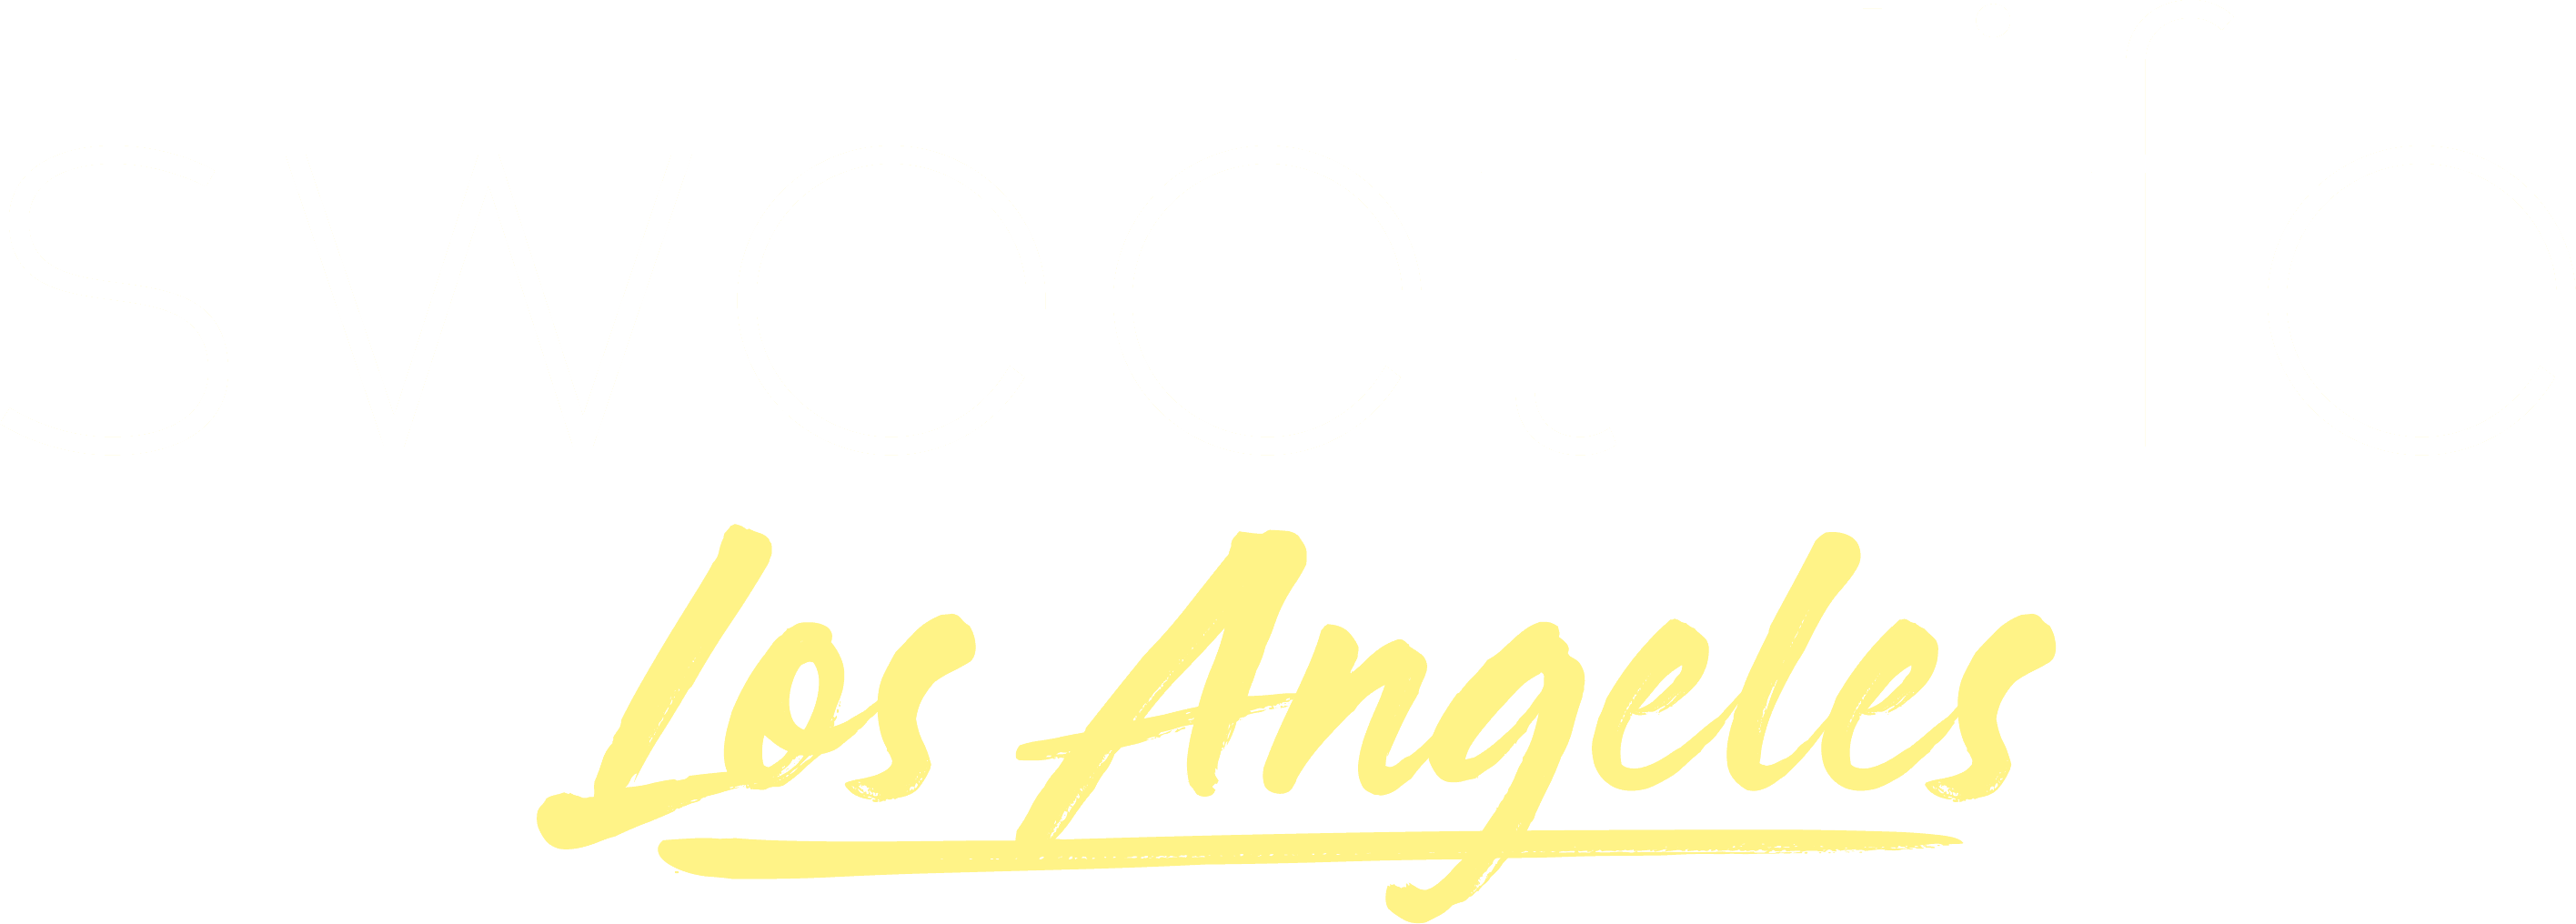 Sweet Life: Los Angeles logo